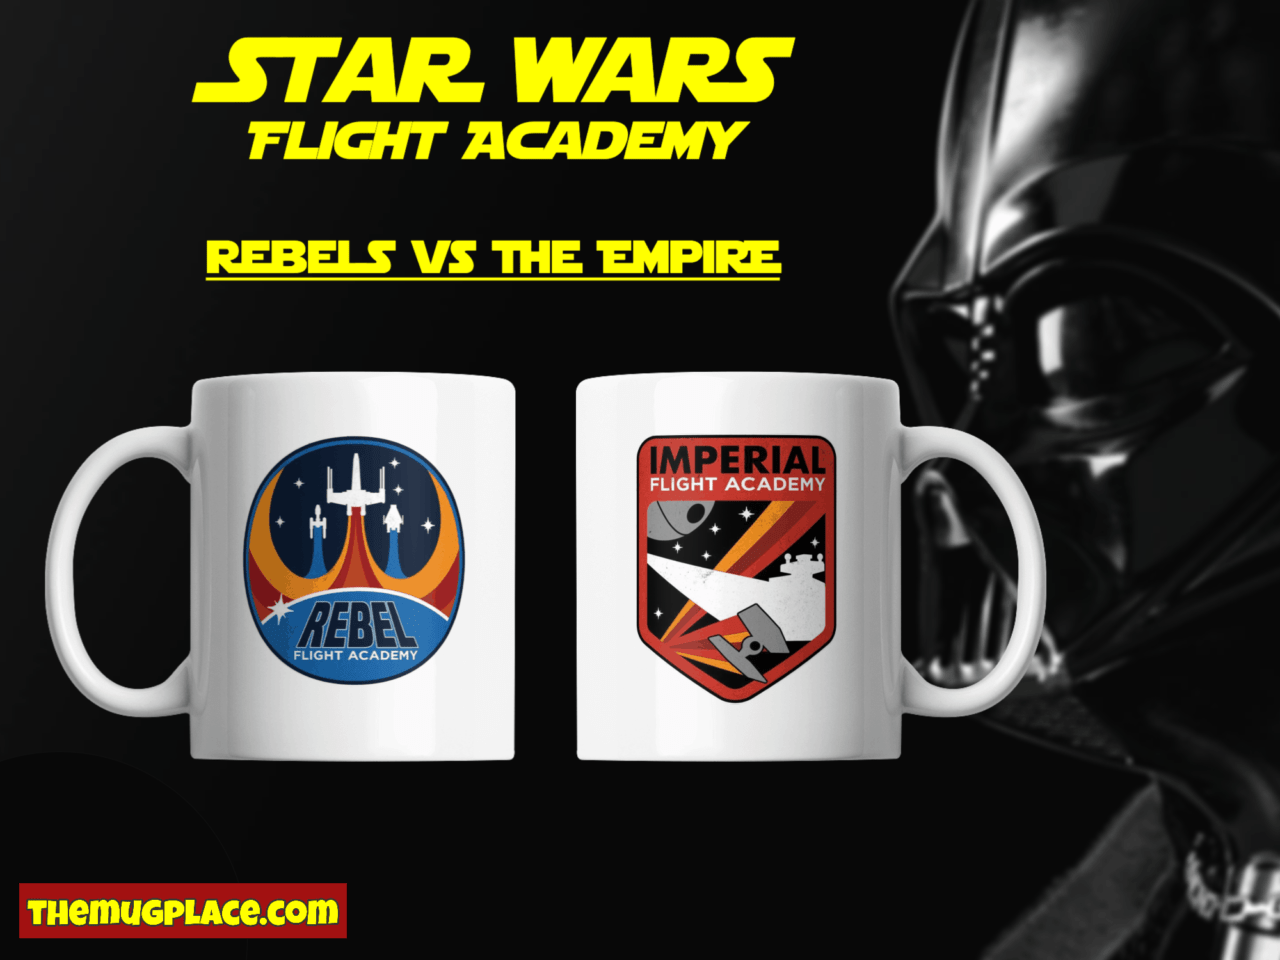 Star Wars Mug Flight Academy Shields - The Rebellion vs The Empire